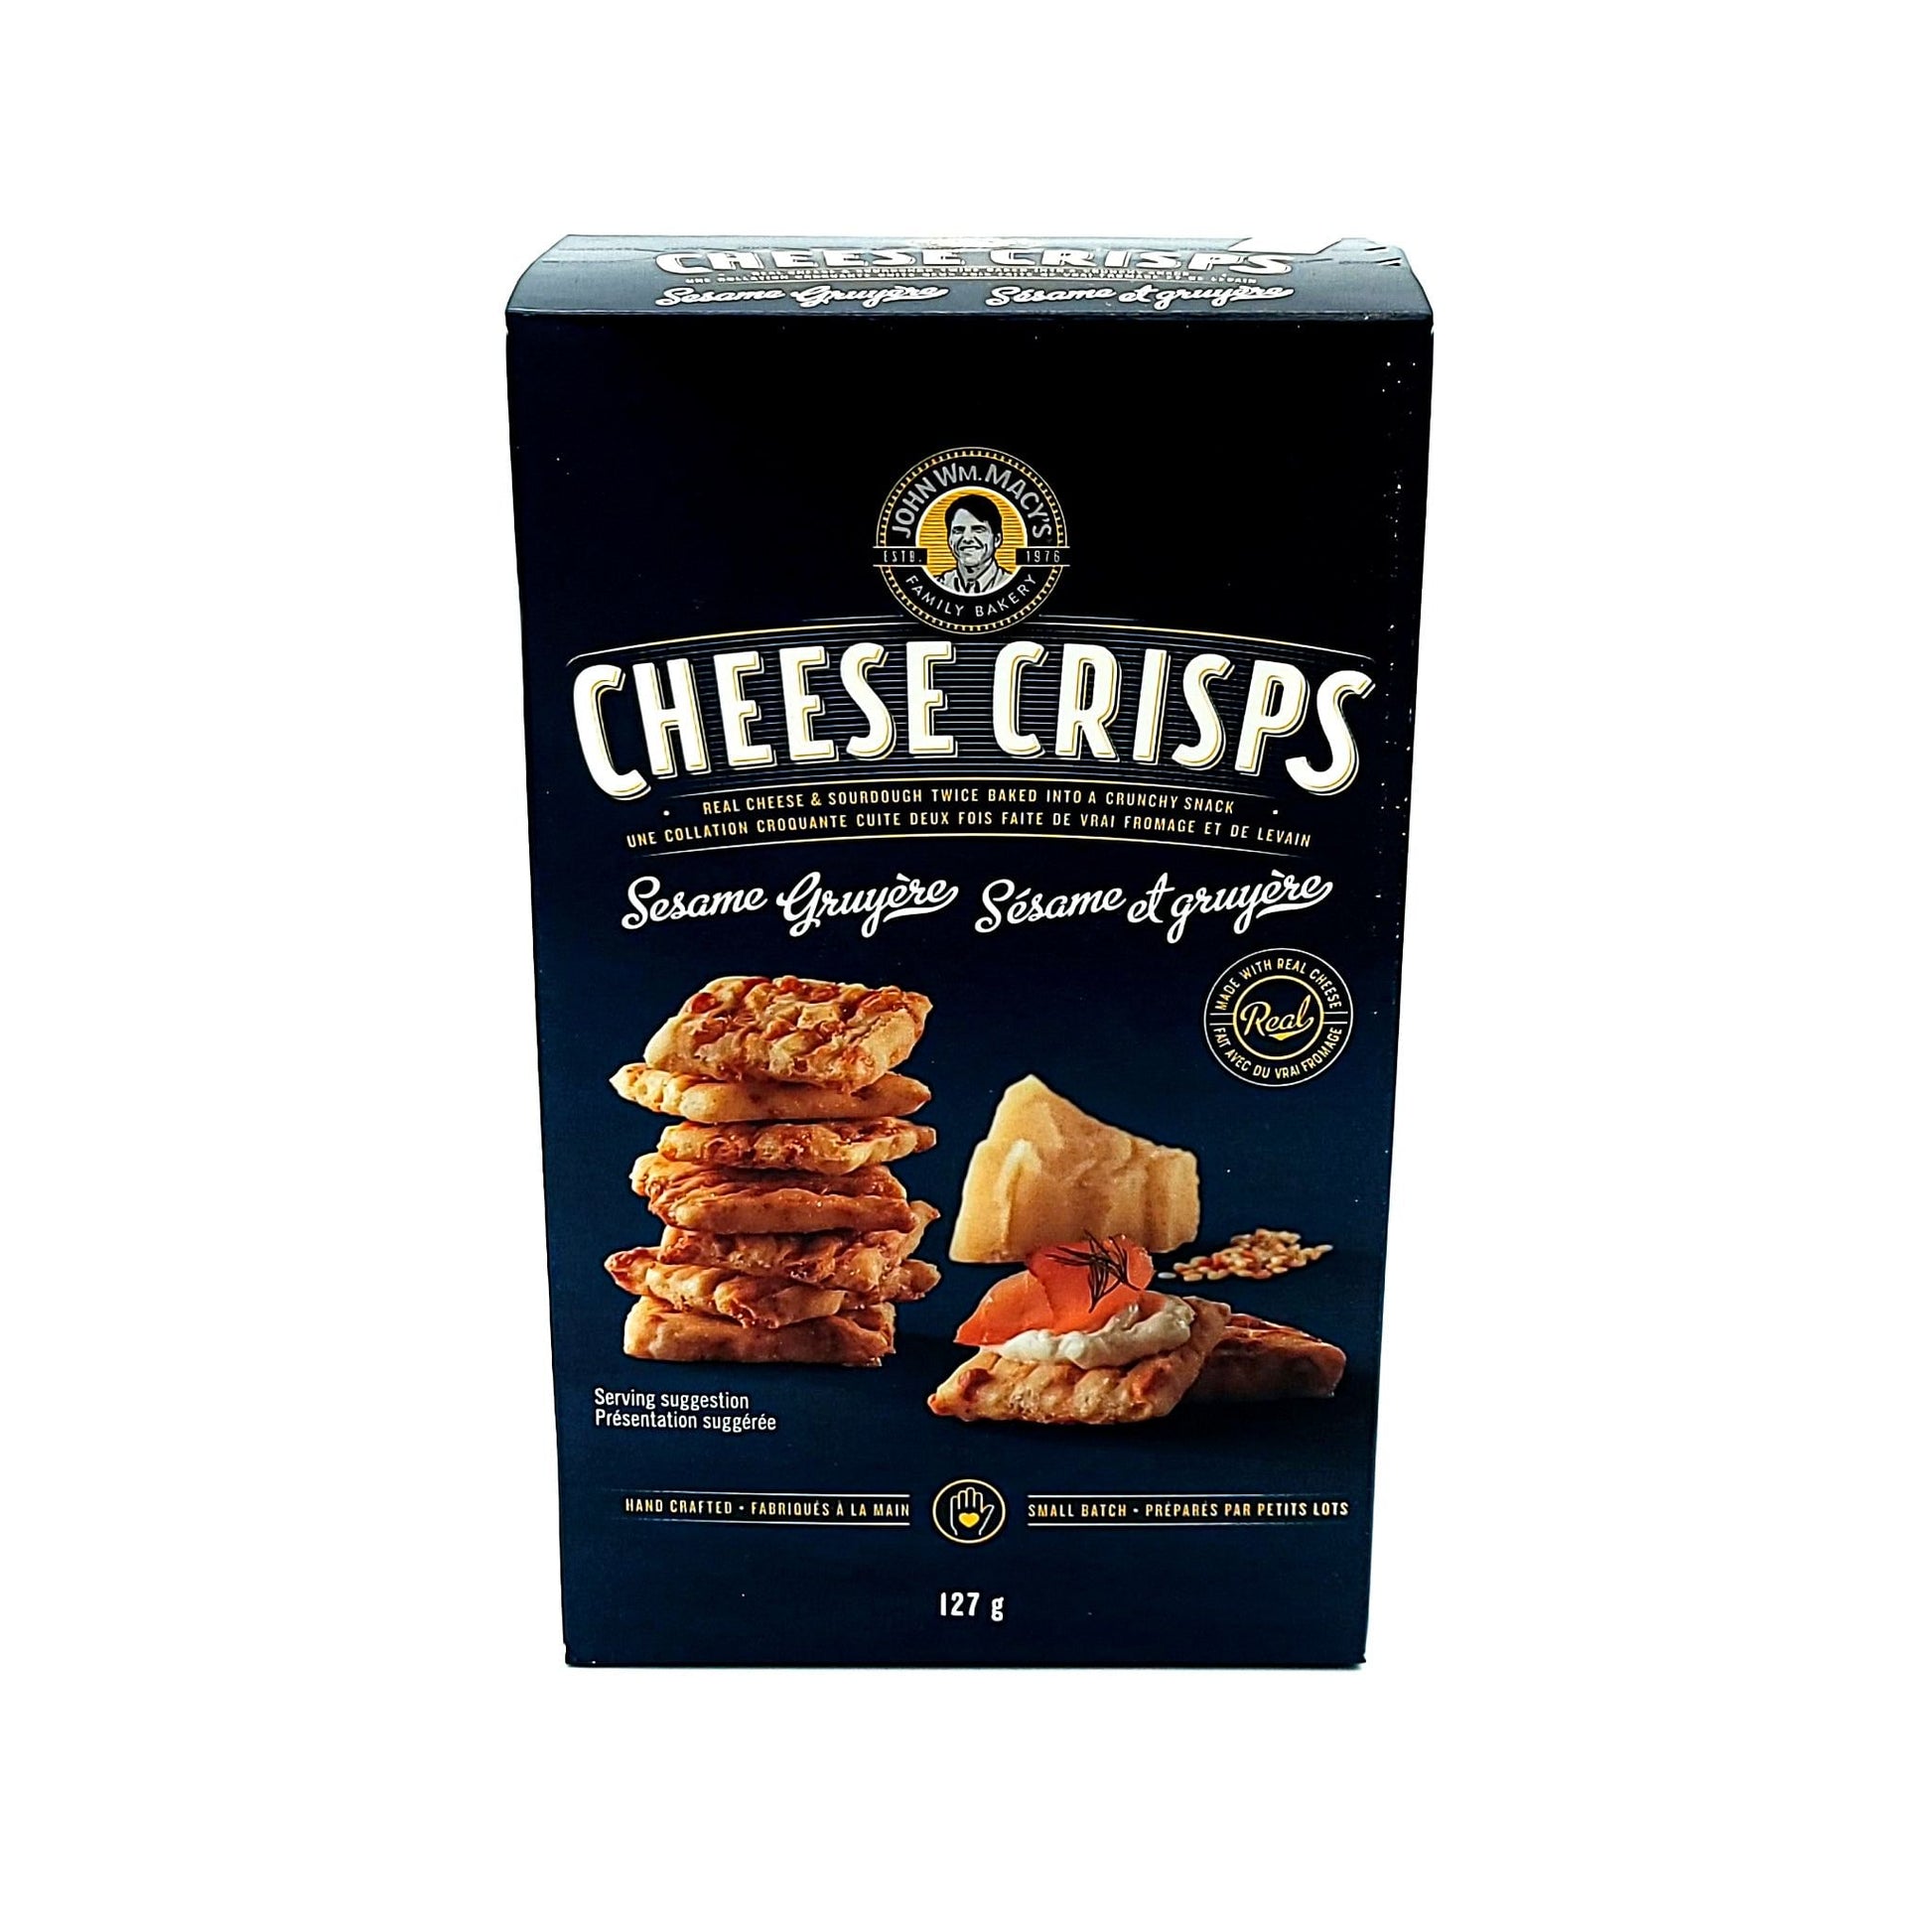 John Wm.Macy's Cheese Crisps - Sesame & Gruyere - 127g - Valbella Gourmet Foods